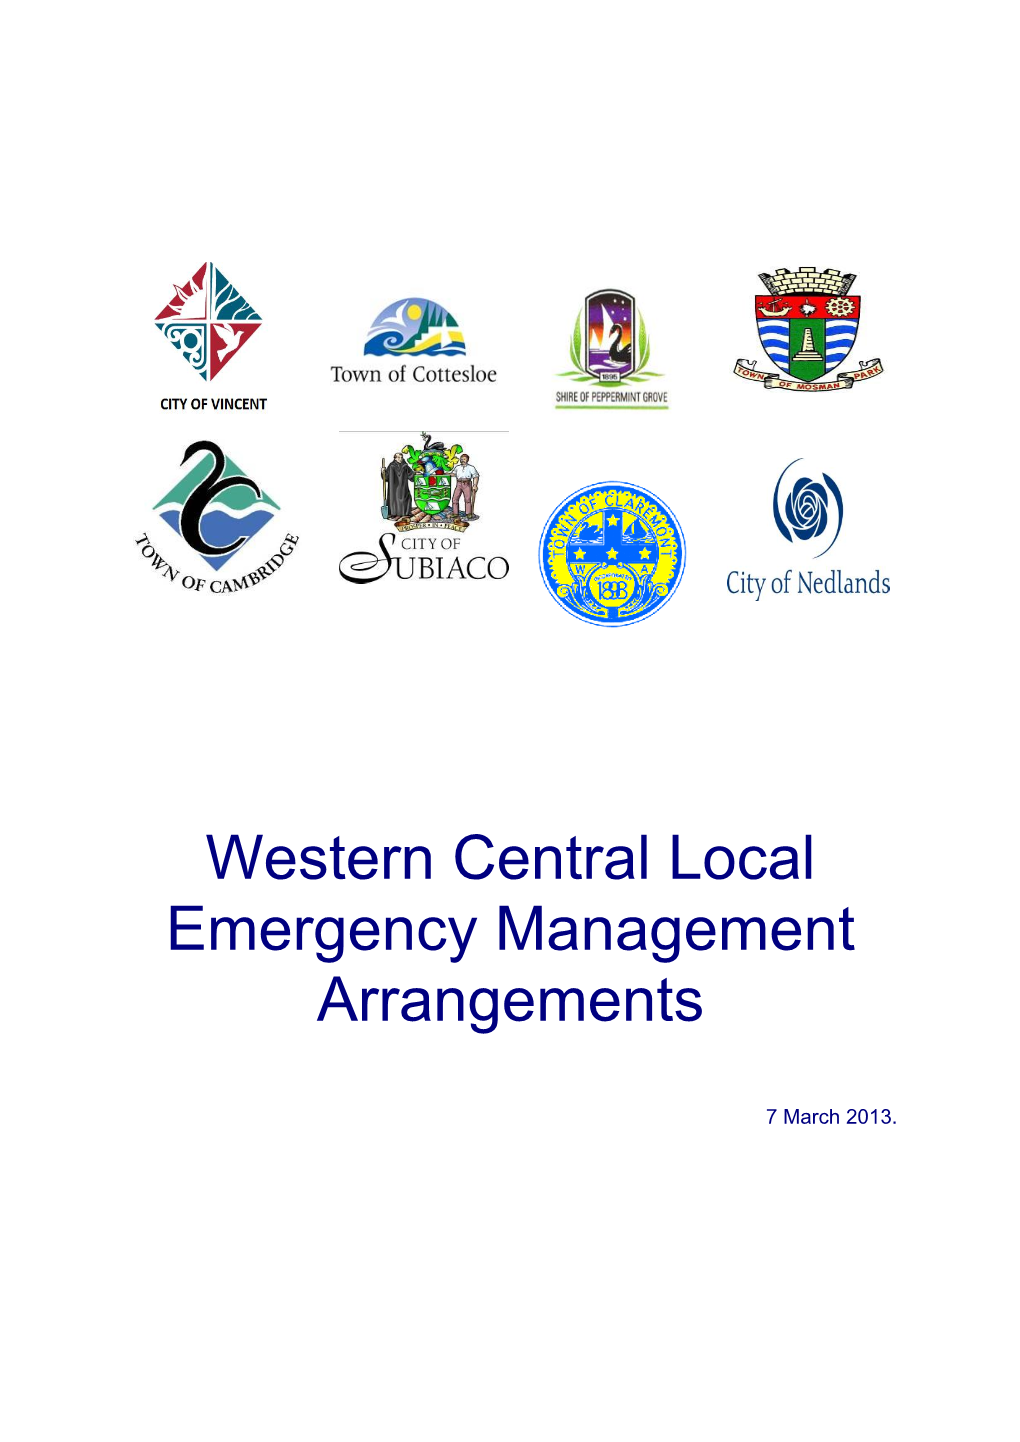 Western Central Local Emergency Management Arrangements